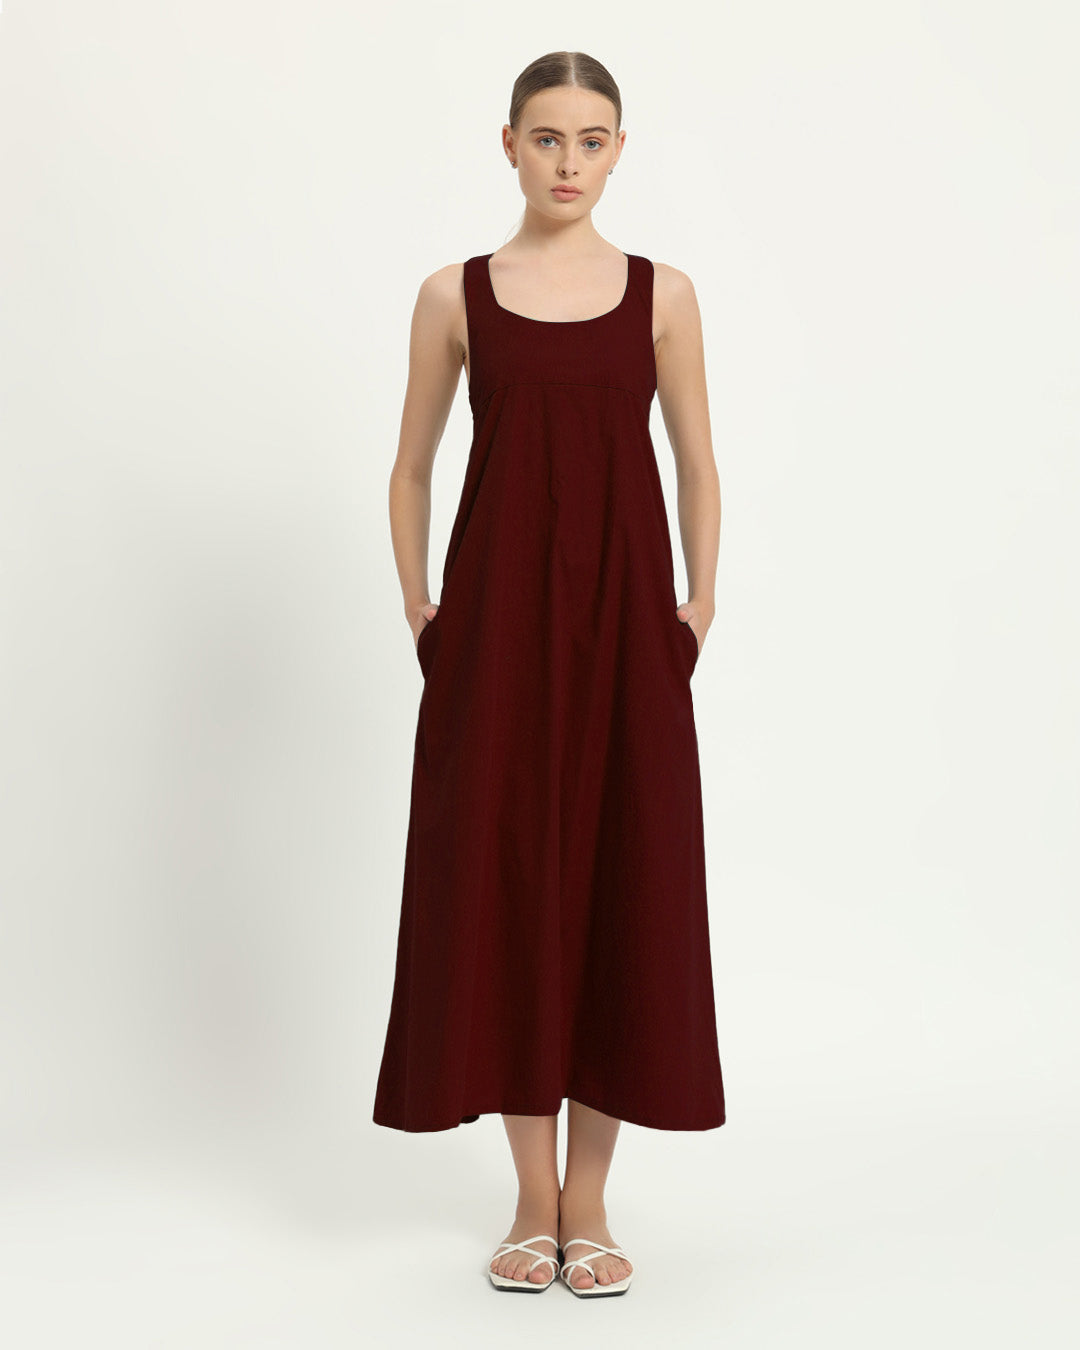 The Magdala Rouge Cotton Dress